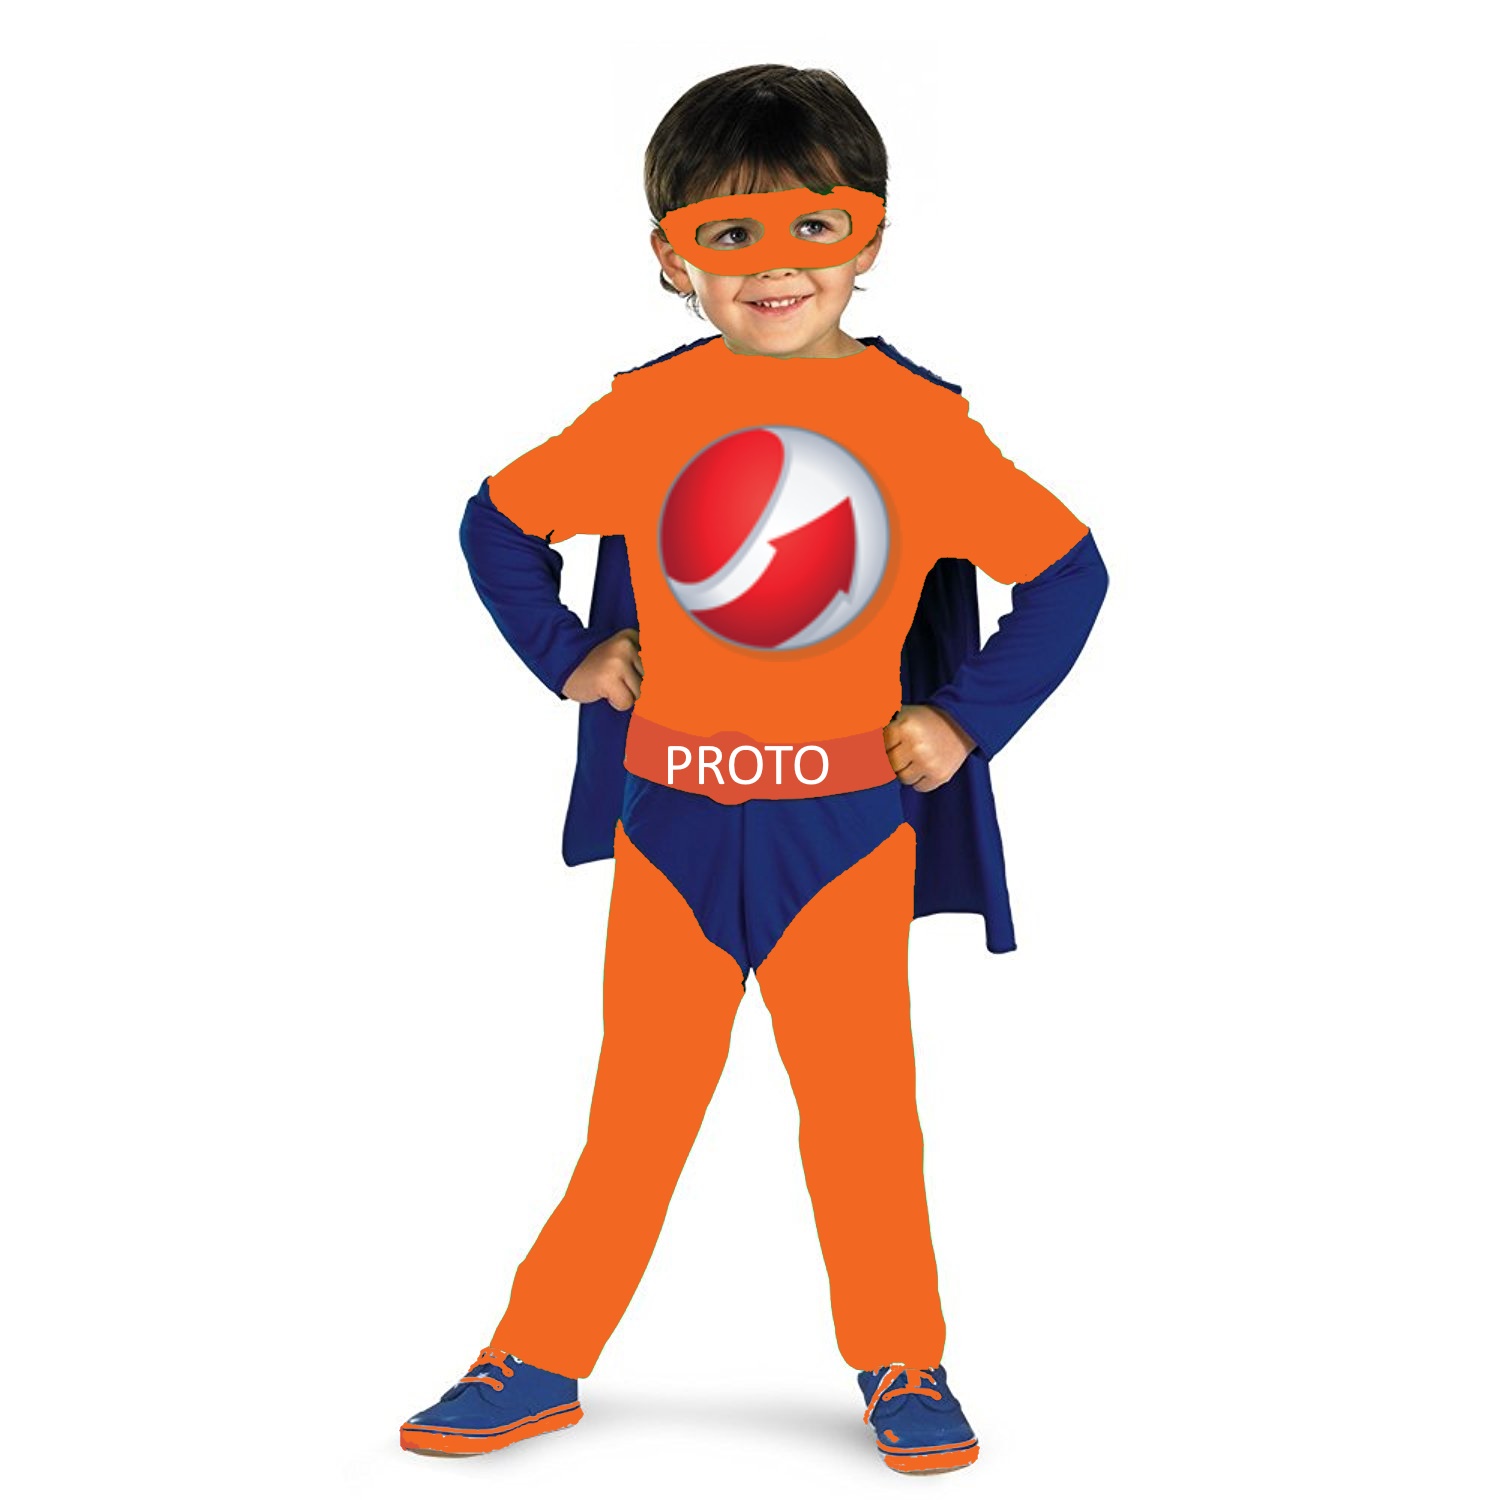 Proto (Protegent) Costume by Humberto2003 on DeviantArt